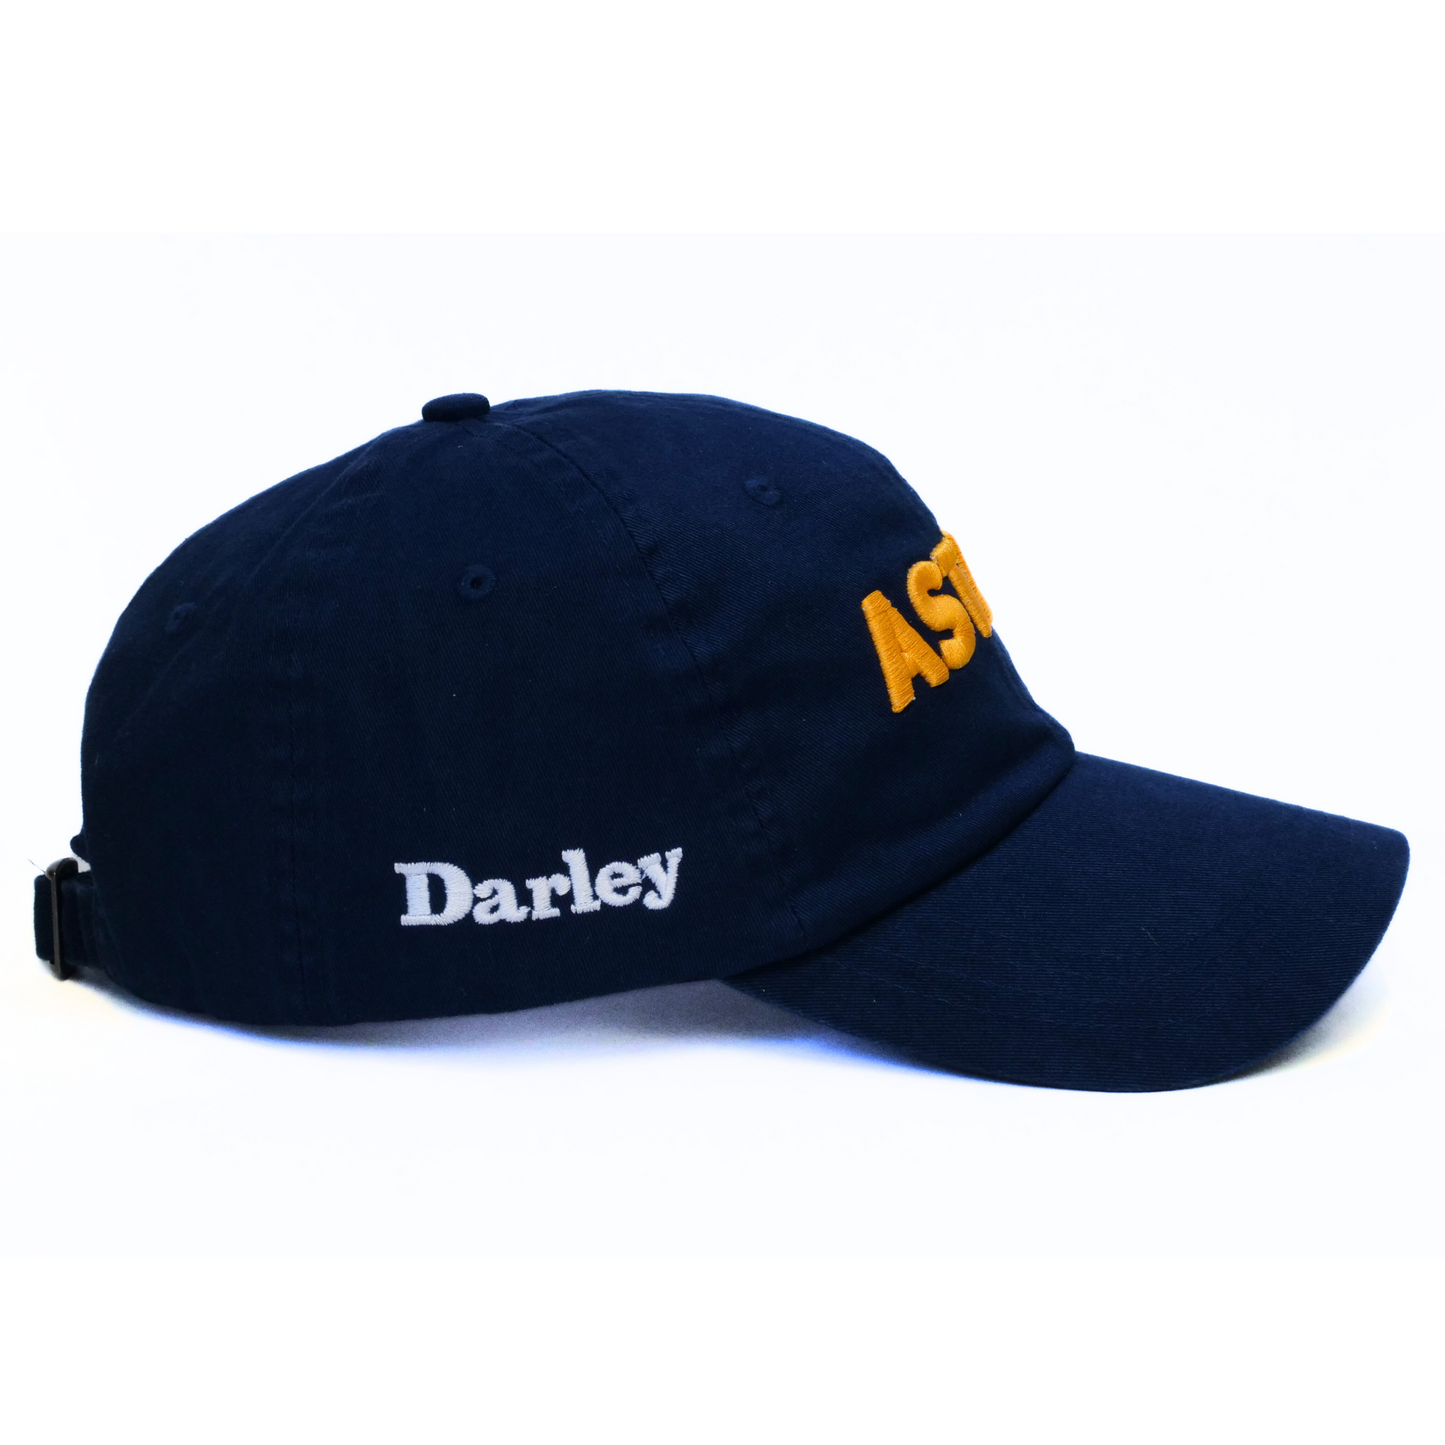 Astern Baseball Cap - Darley